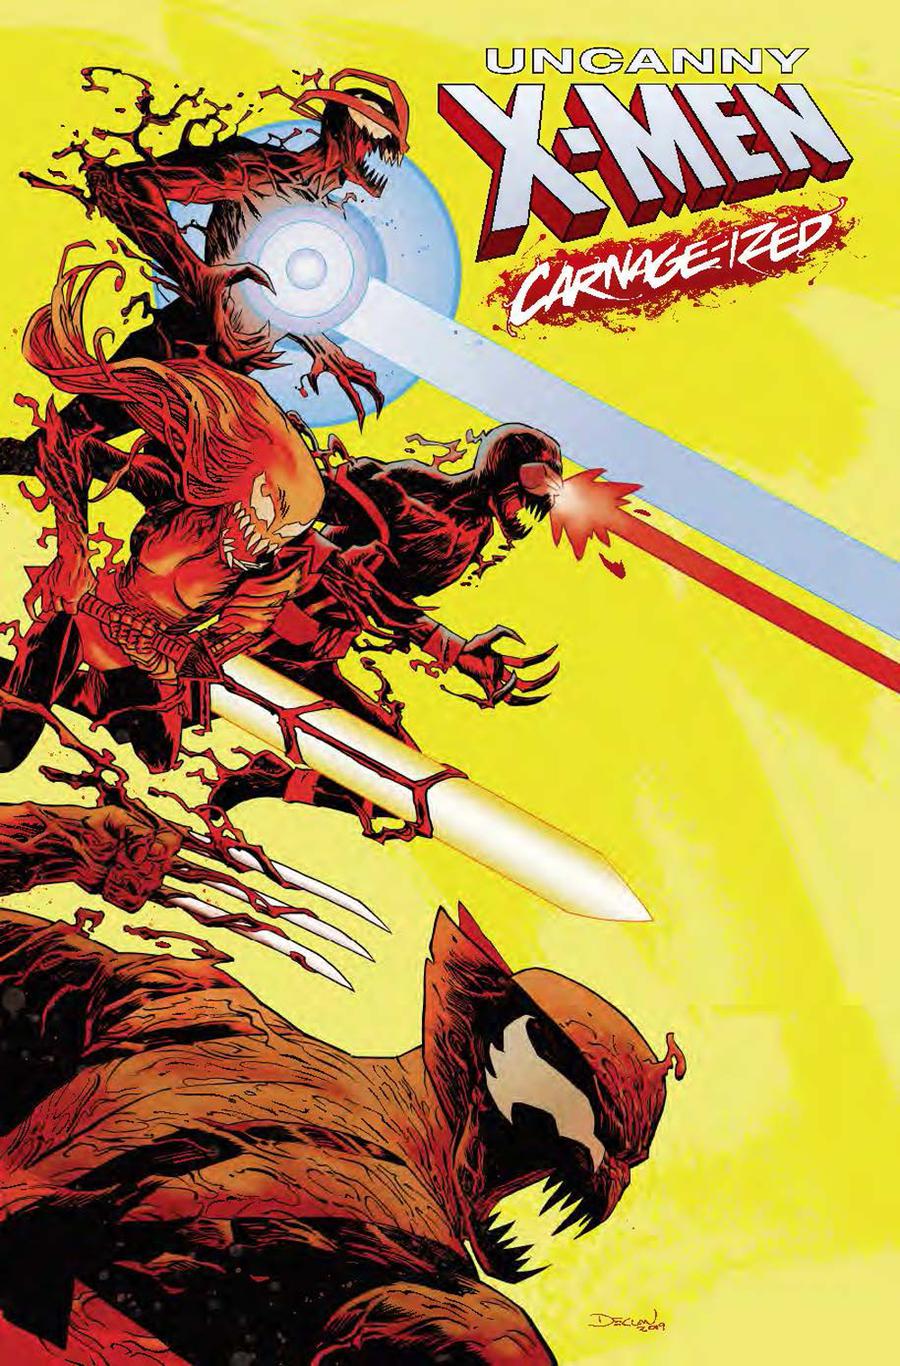 Uncanny X-Men Vol 5 #21 Cover B Variant Declan Shalvey Carnage-Ized Cover